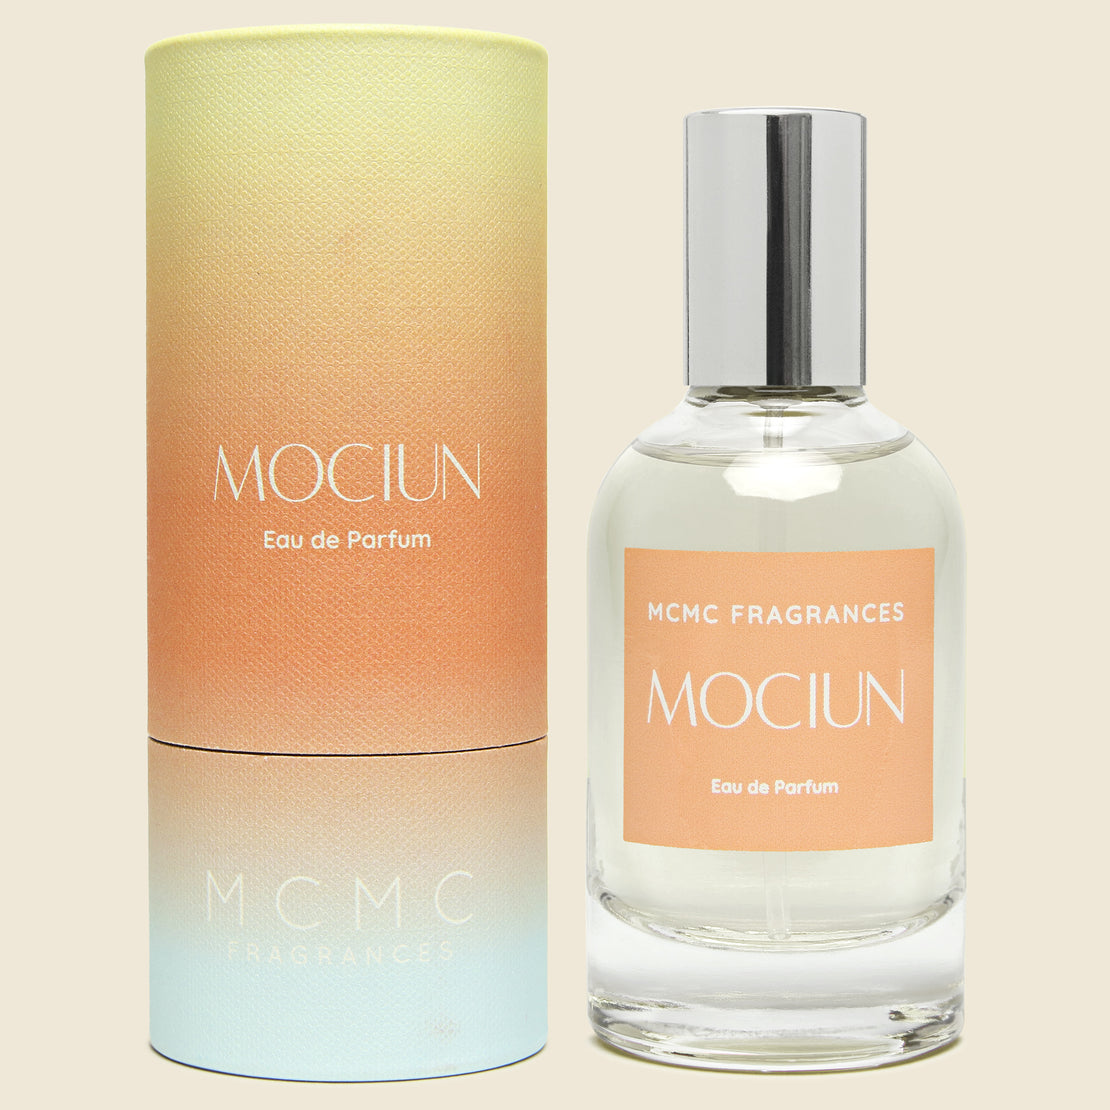 MCMC Fragrances Eau de Parfum - MOCIUN, 40ml